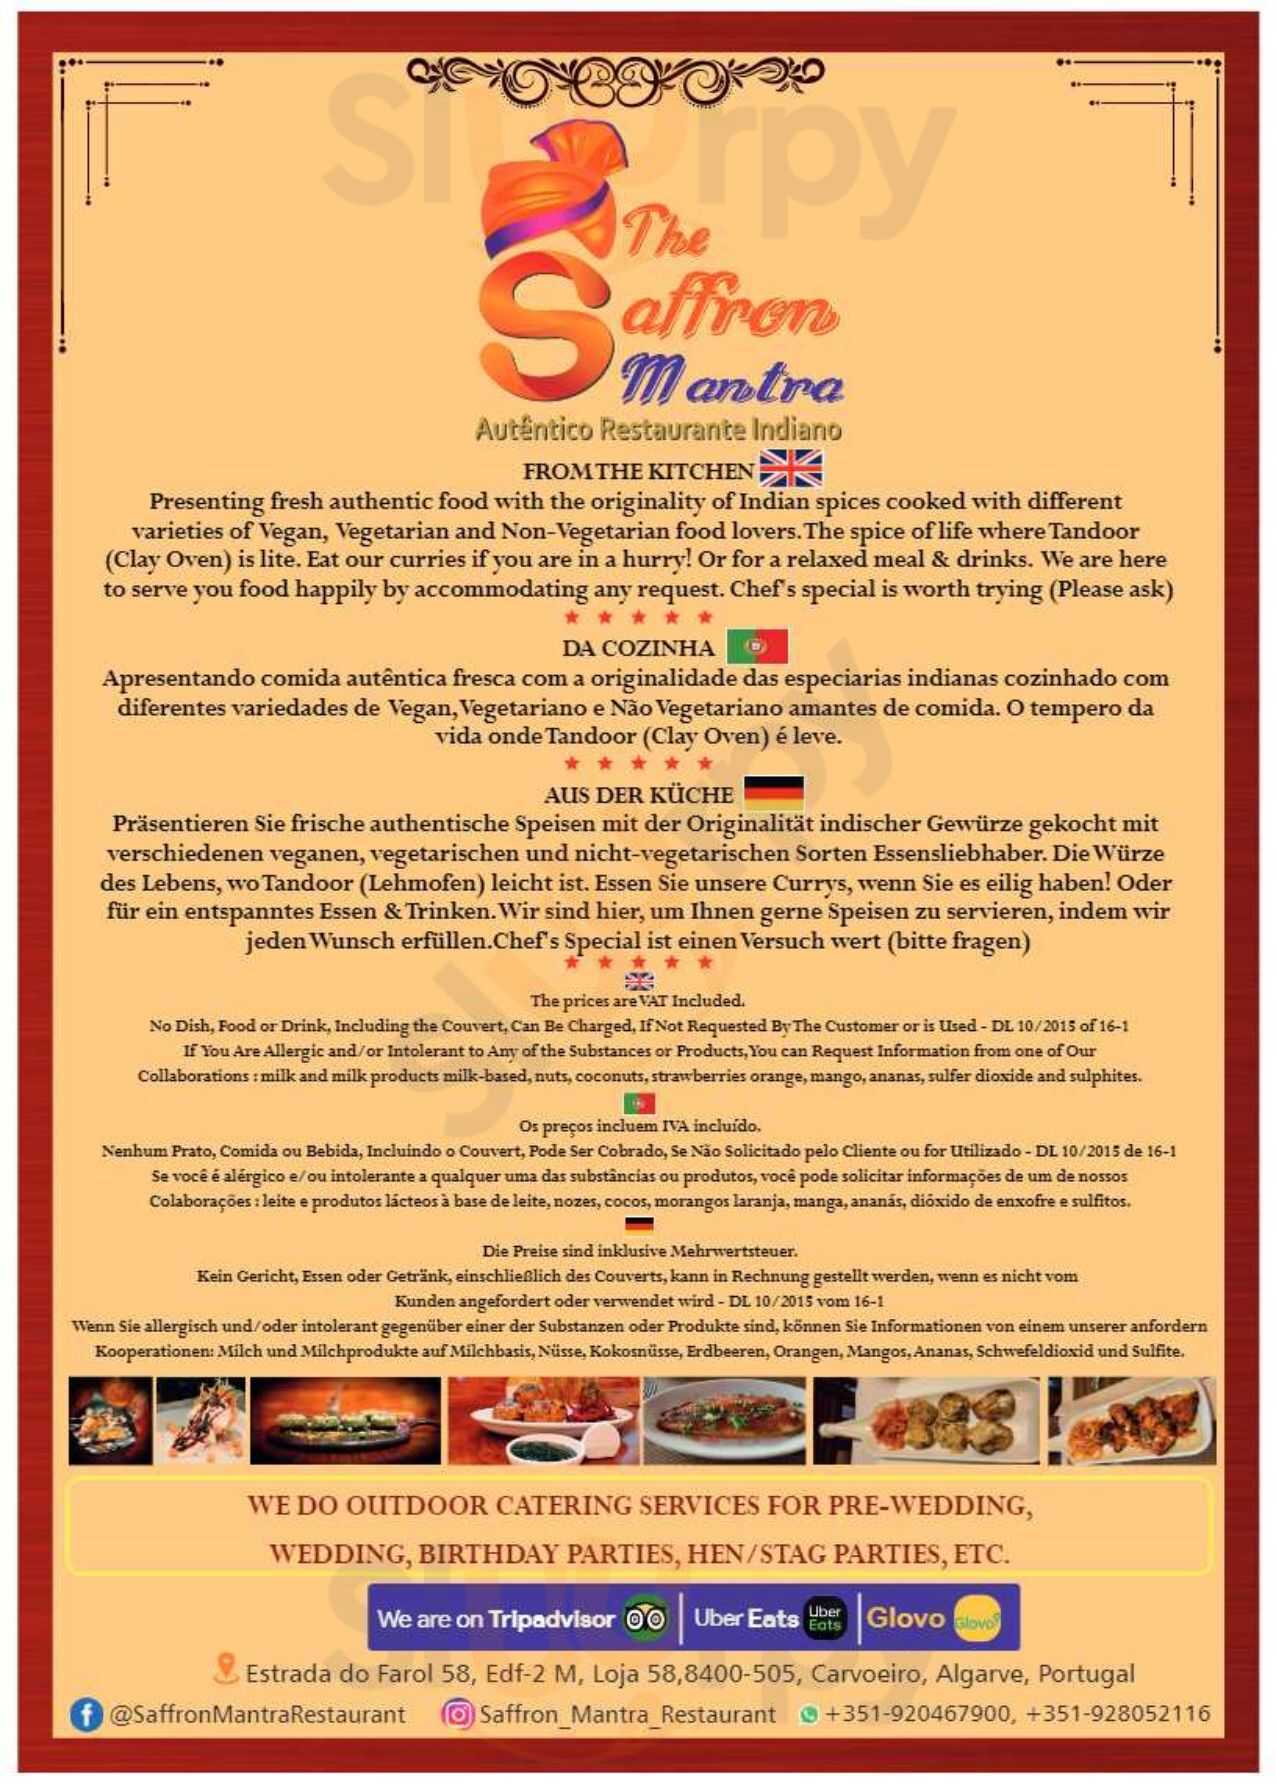 Saffron Mantra Restaurante Indiano Carvoeiro Menu - 1